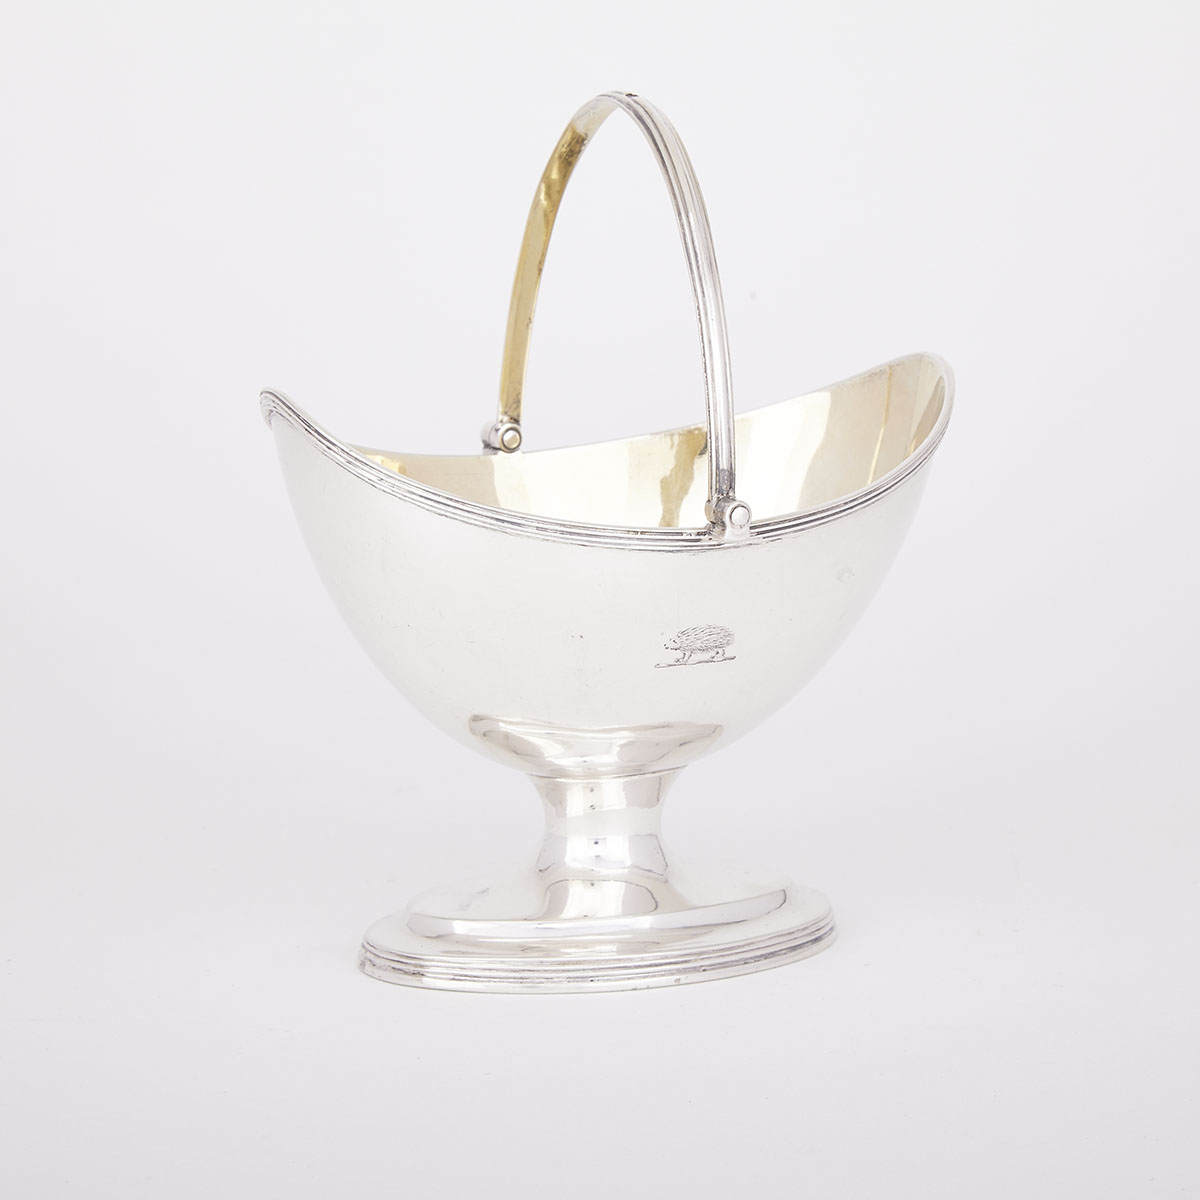 George III Silver Oval Sugar Basket, London, Robert Hennell I, 1793